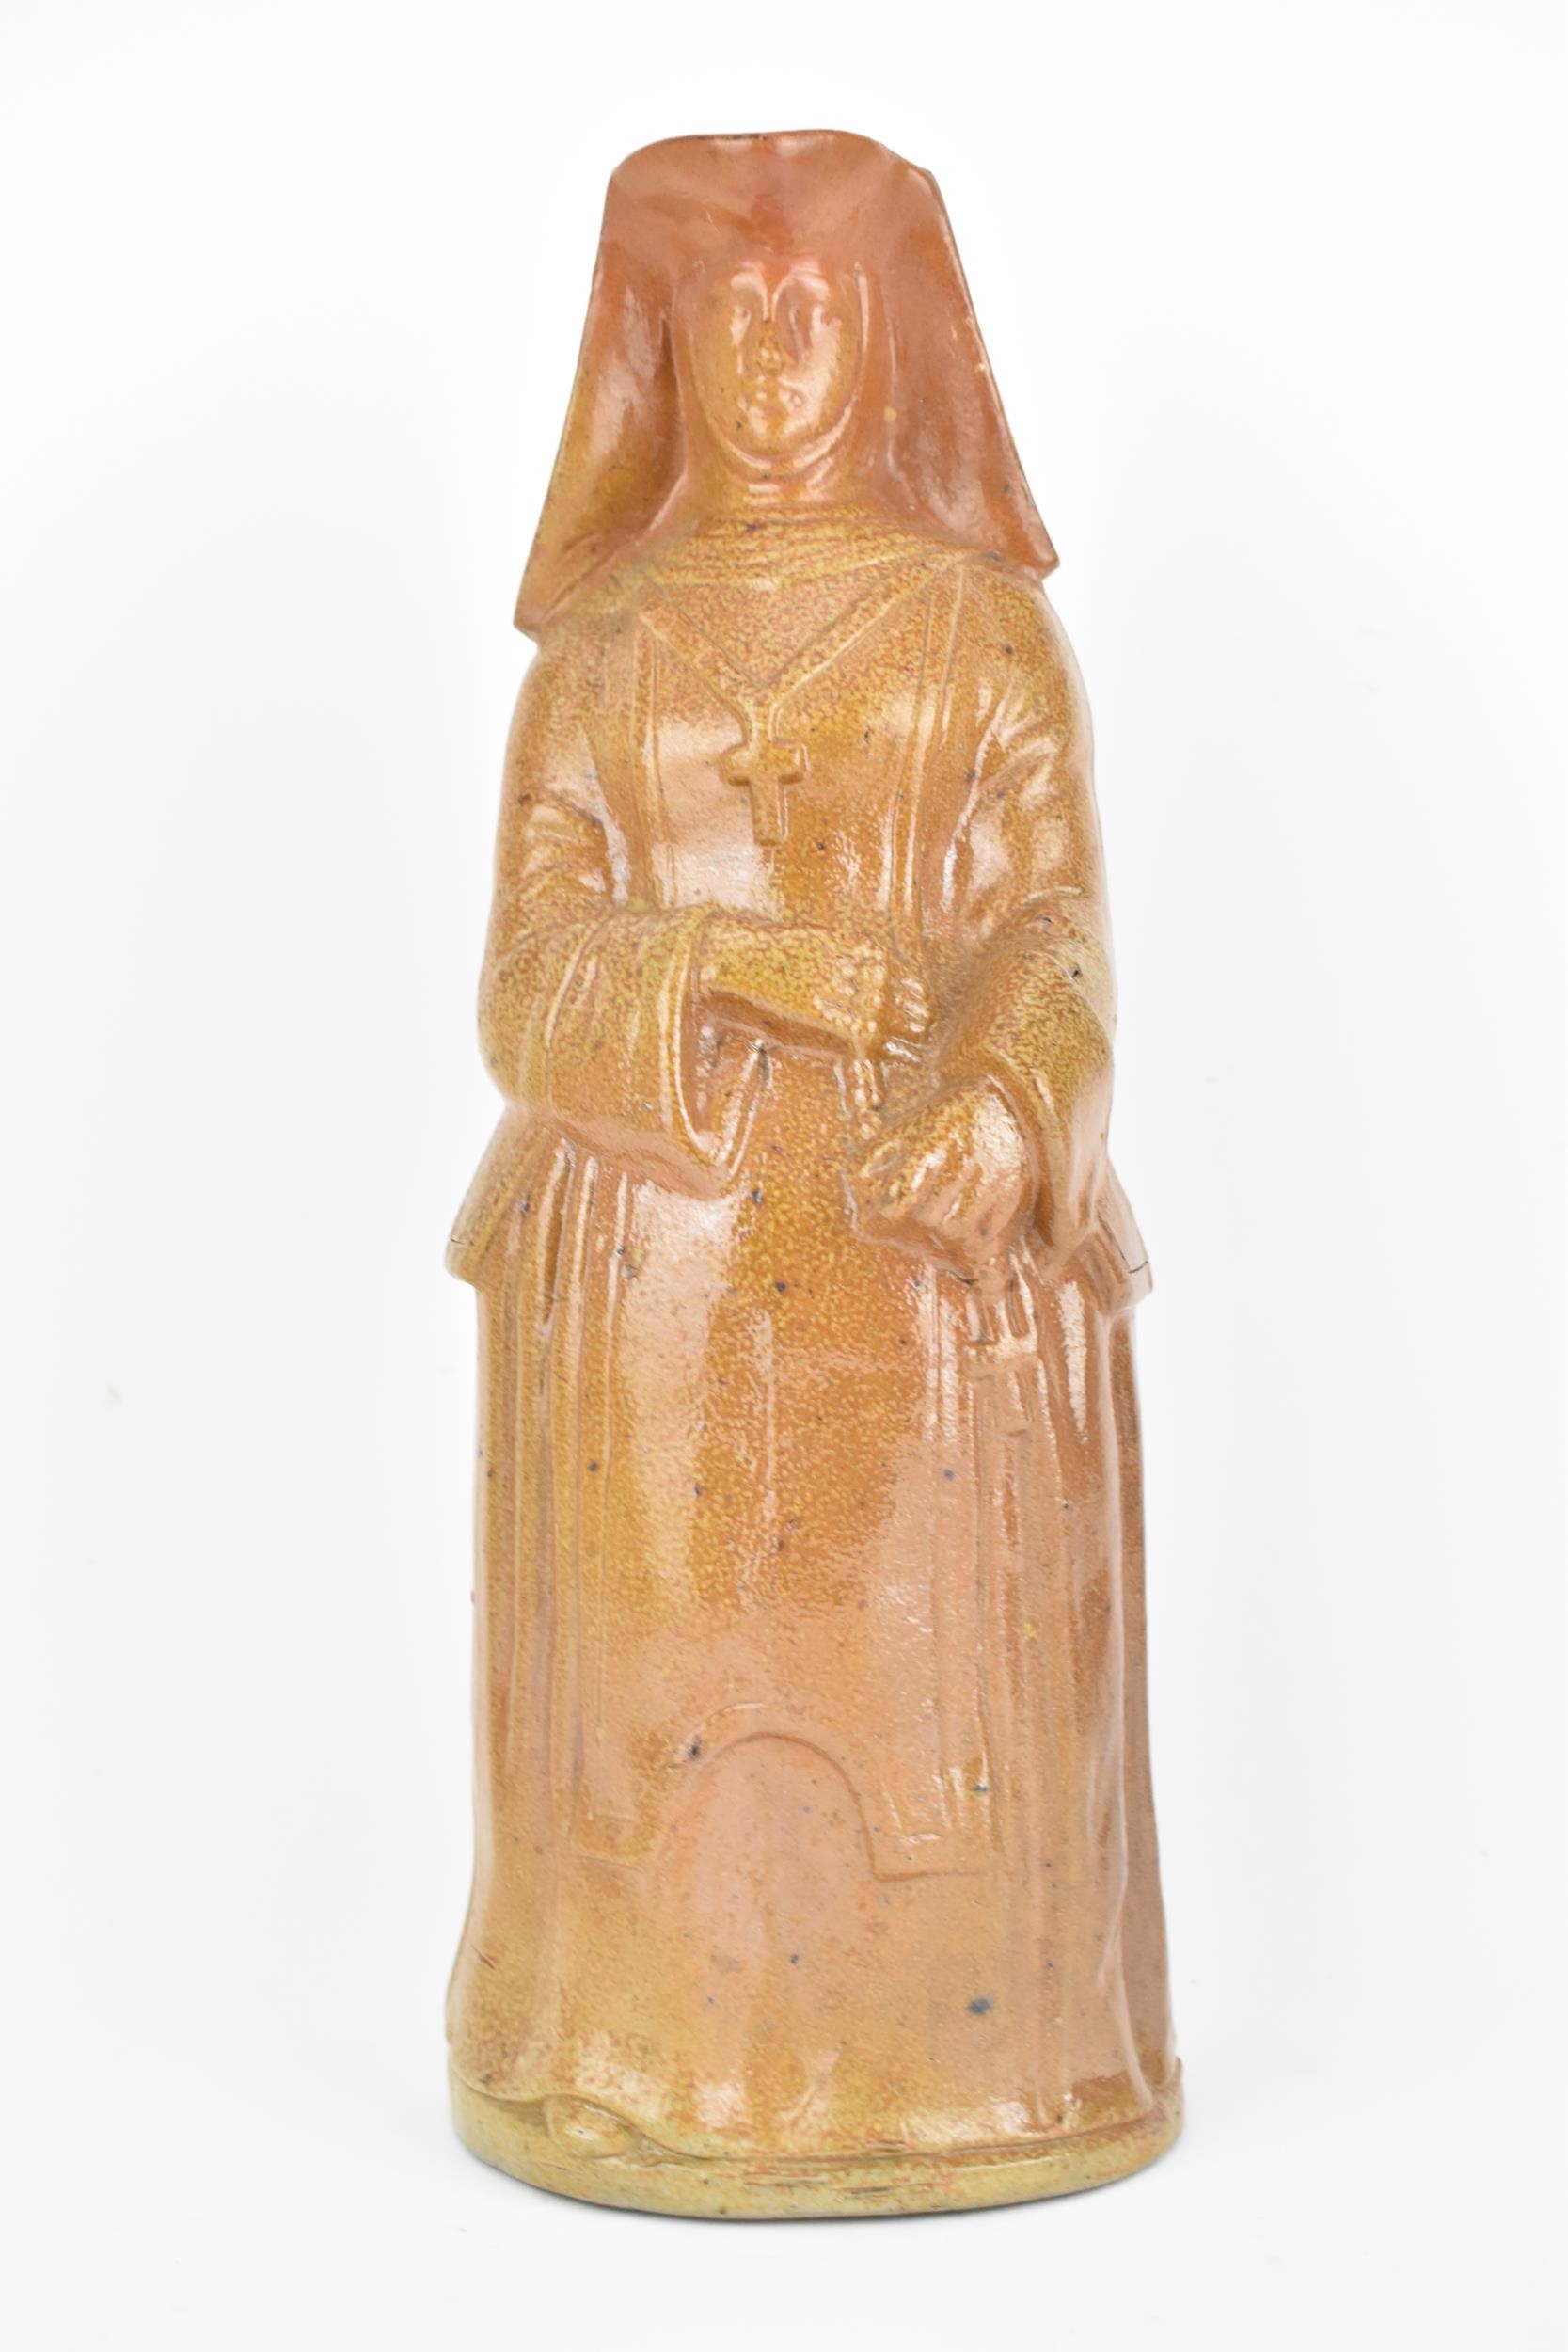 A 19th century salt glaze stoneware jug fashioned as a nun holding rosary beads, 36cm high,